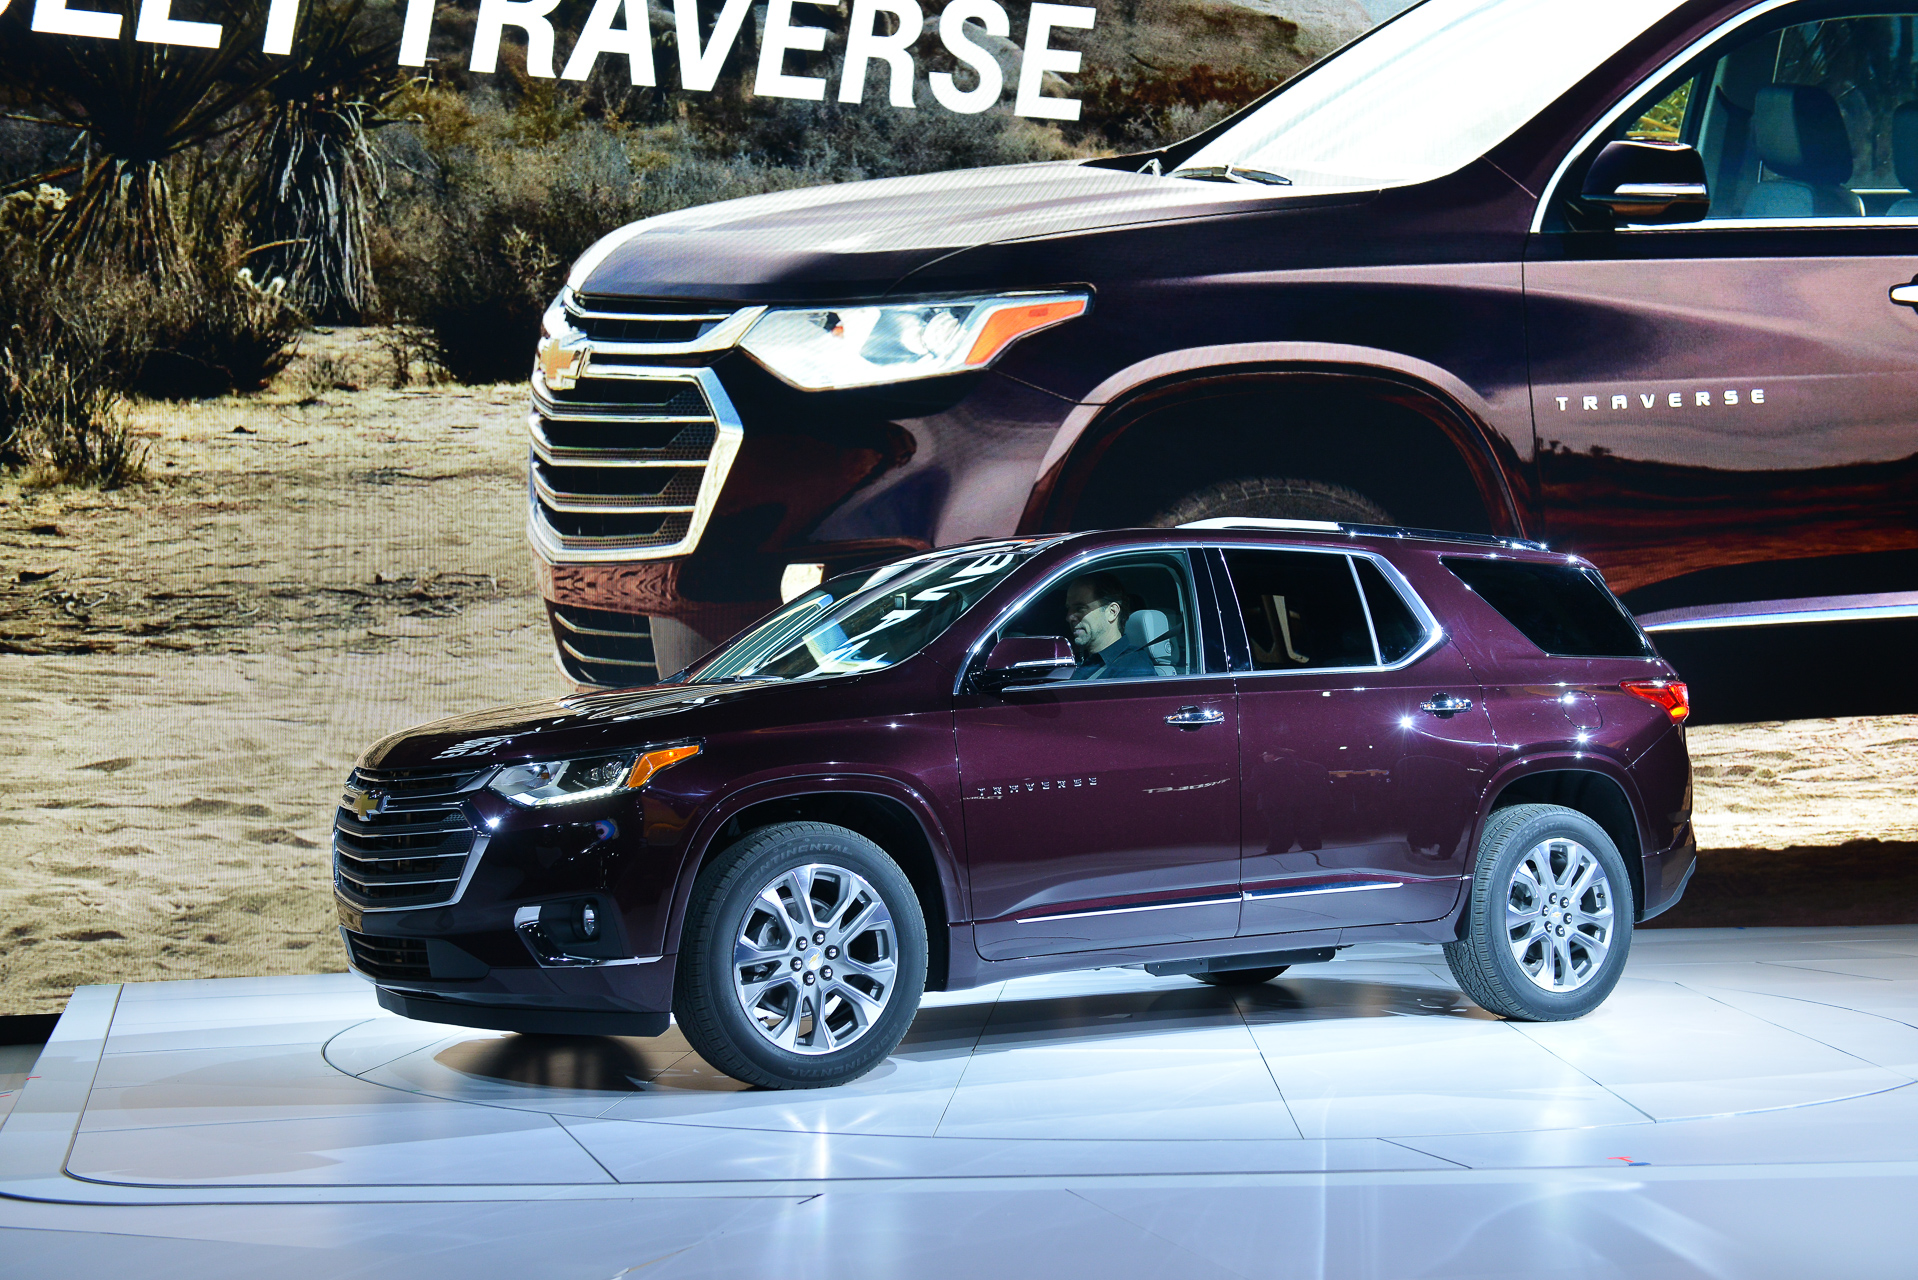 2018 Chevrolet Traverse Vs 2018 Buick Enclave Compare Cars